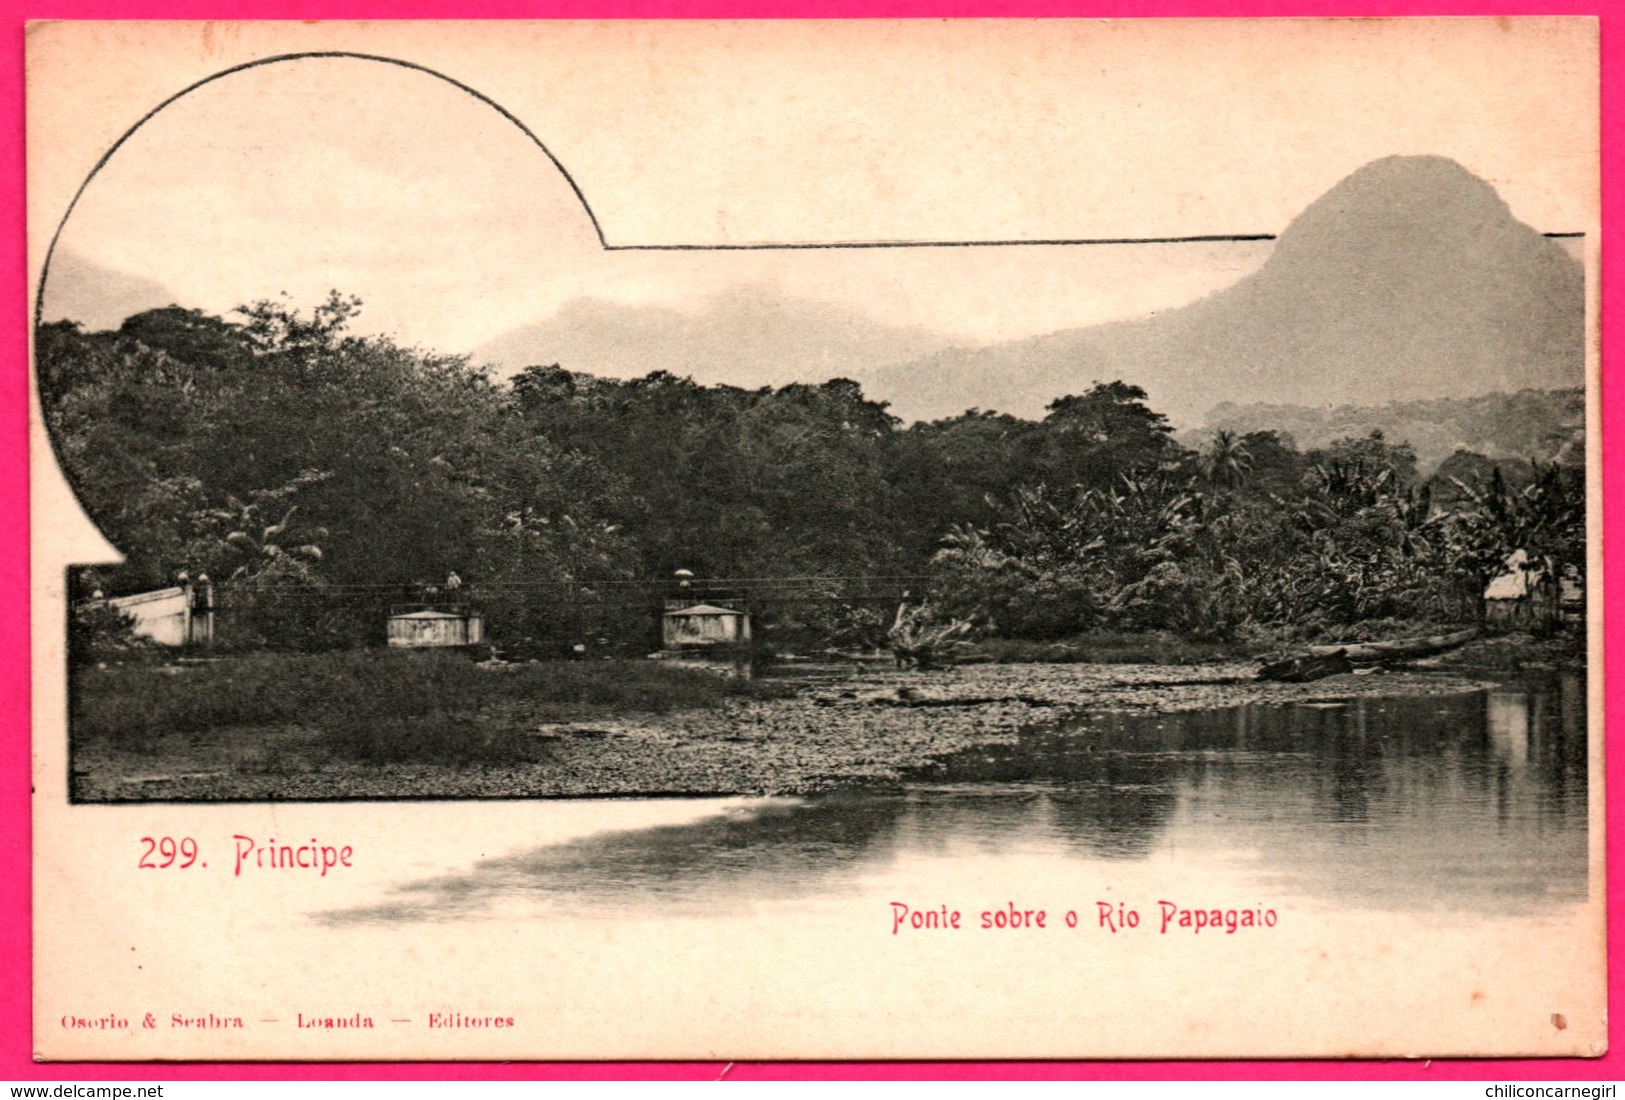 Principe - Ponte Sobre O Rio Papagaio - Pont Sur La Rivière - Edit. OSORIO & SEABRA - Sao Tome Et Principe